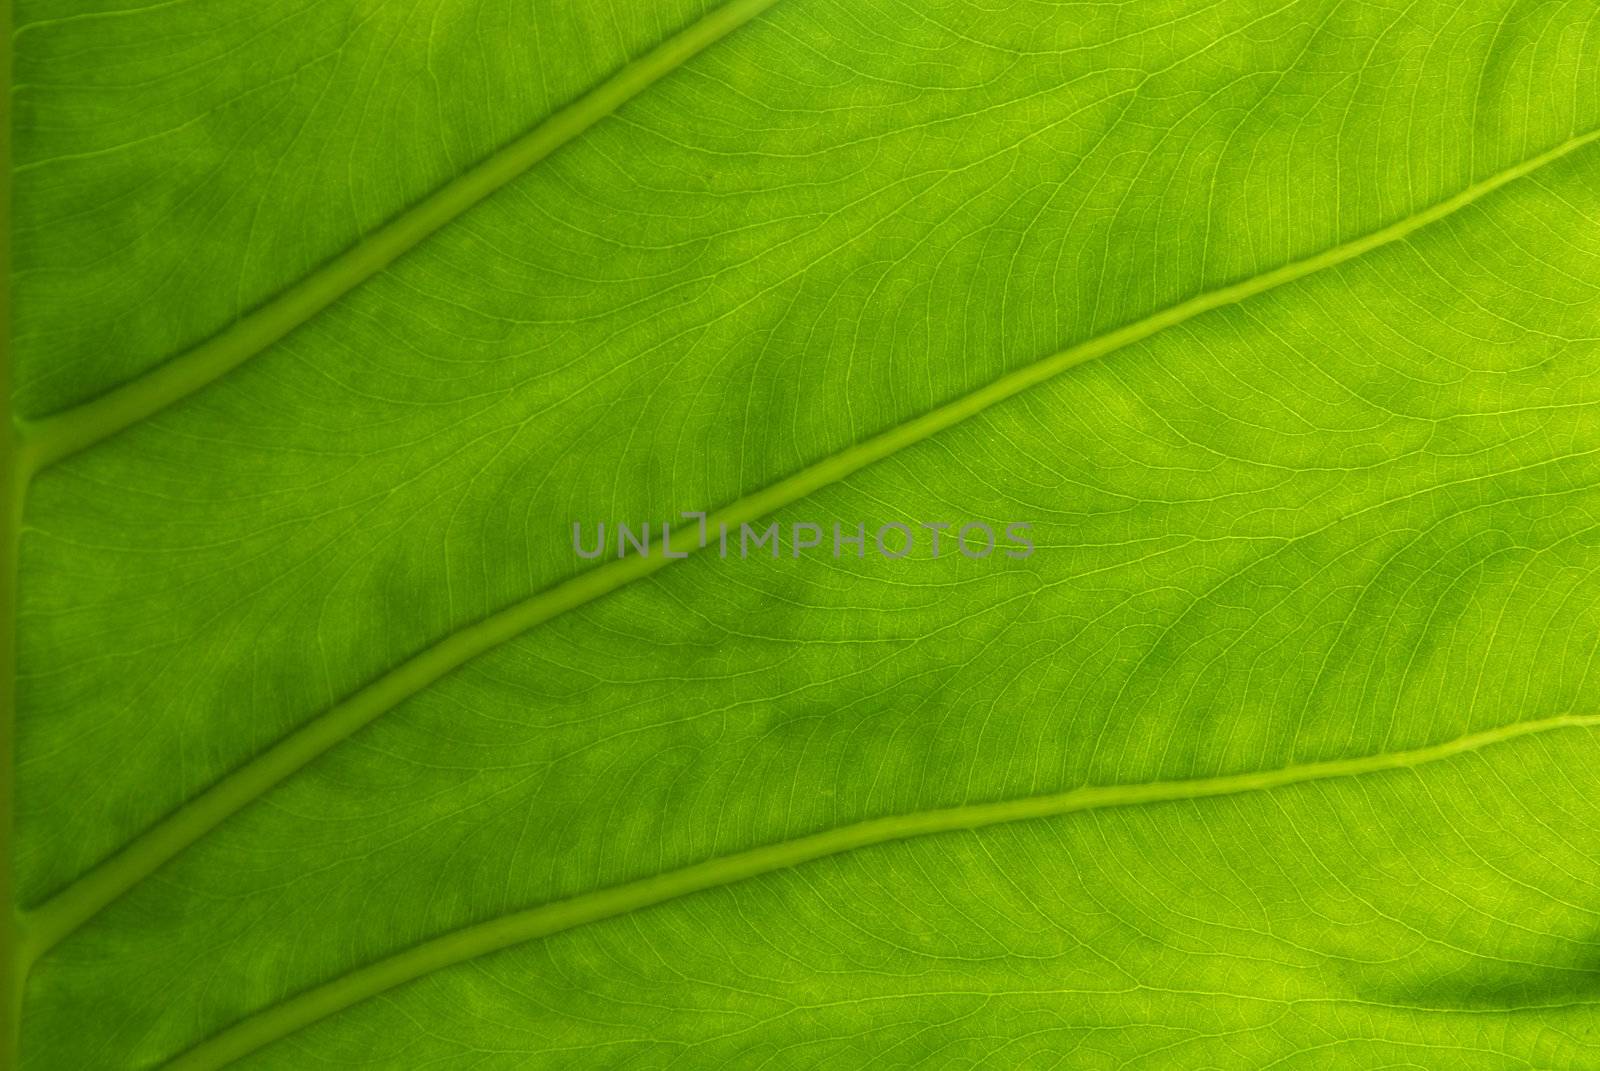 Alocasia leaf  by opasstudio